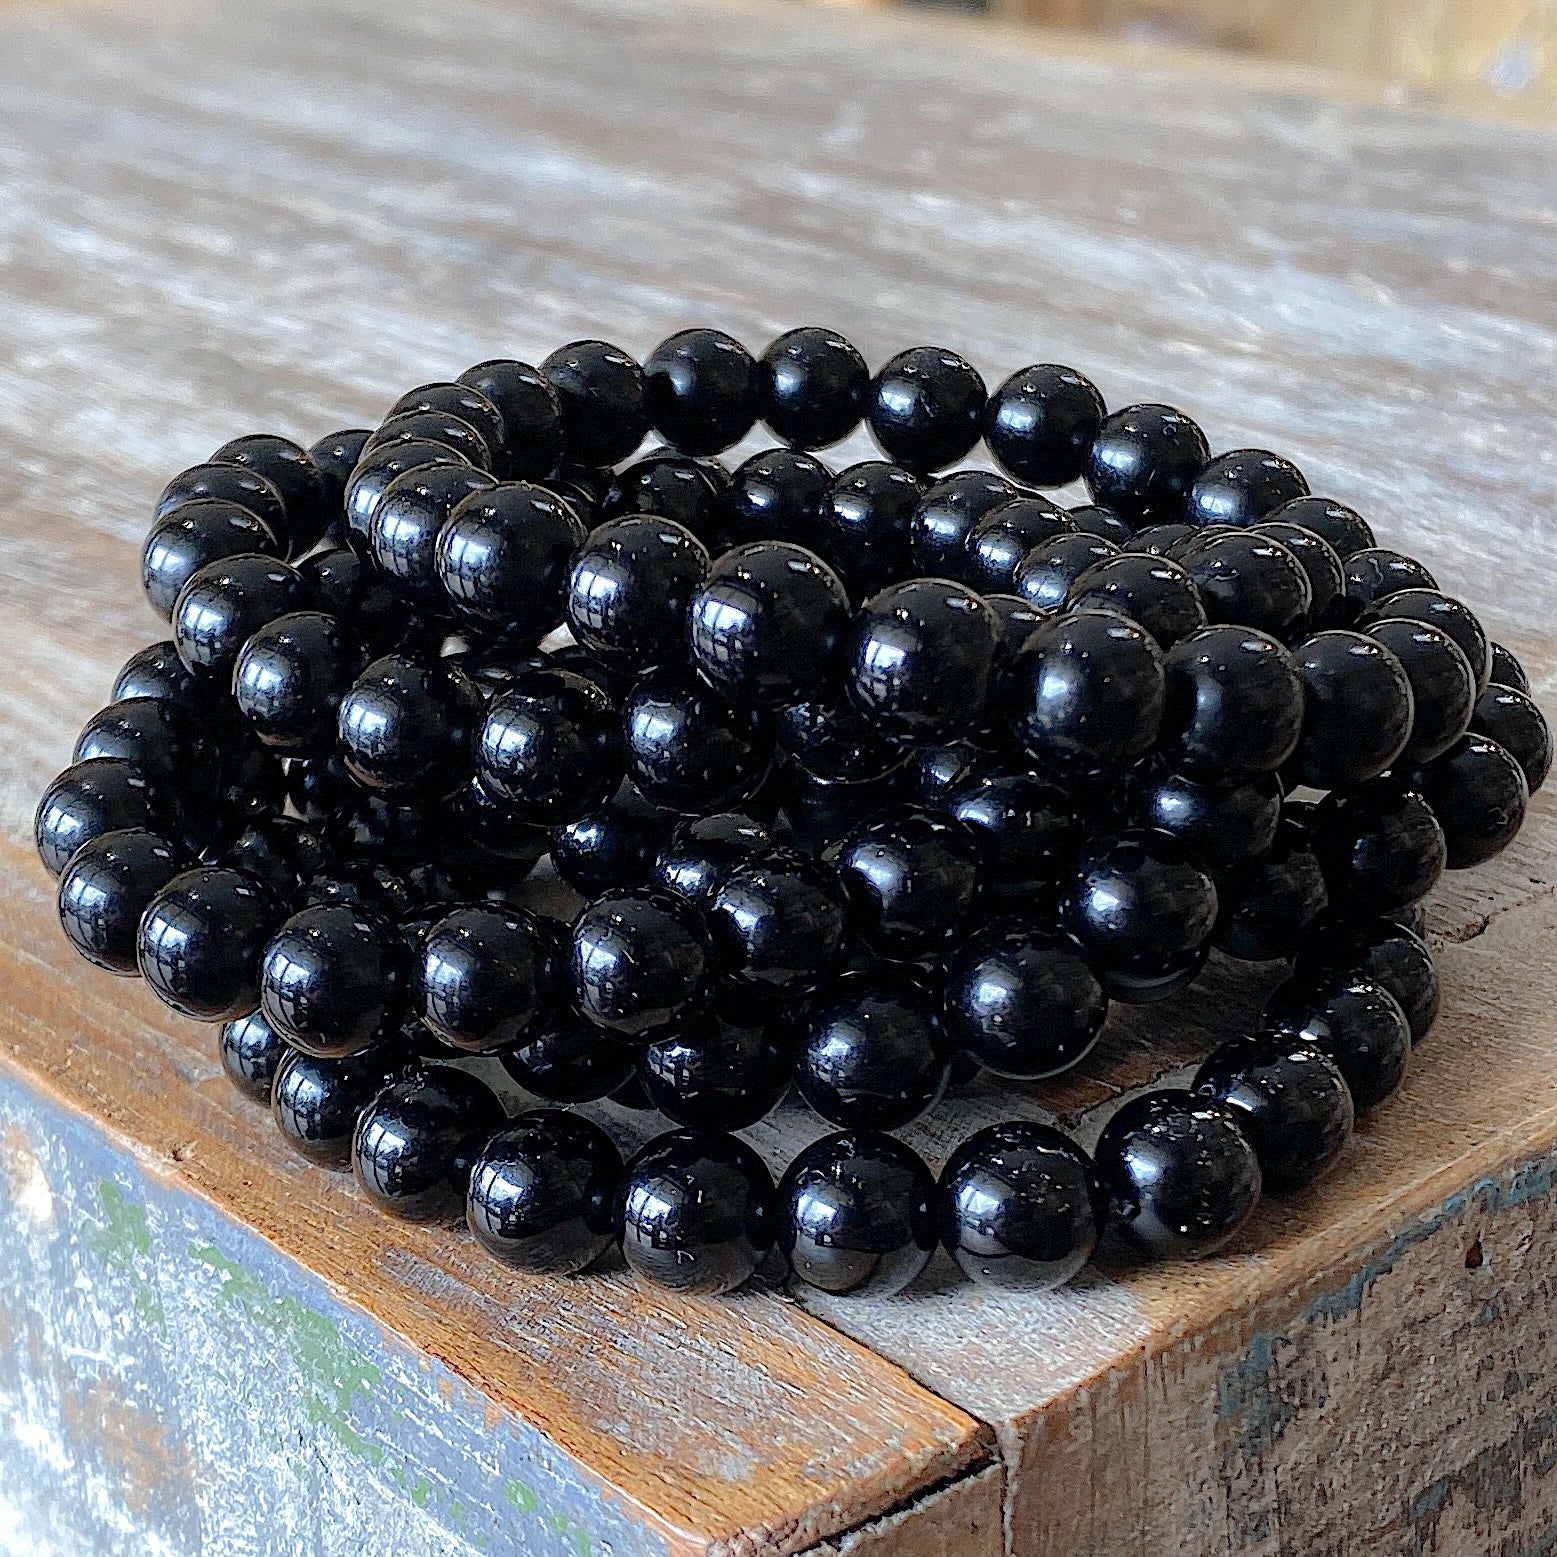 Buy Studd Muffyn | Black Obsidian Crystal Bracelet at Amazon.in